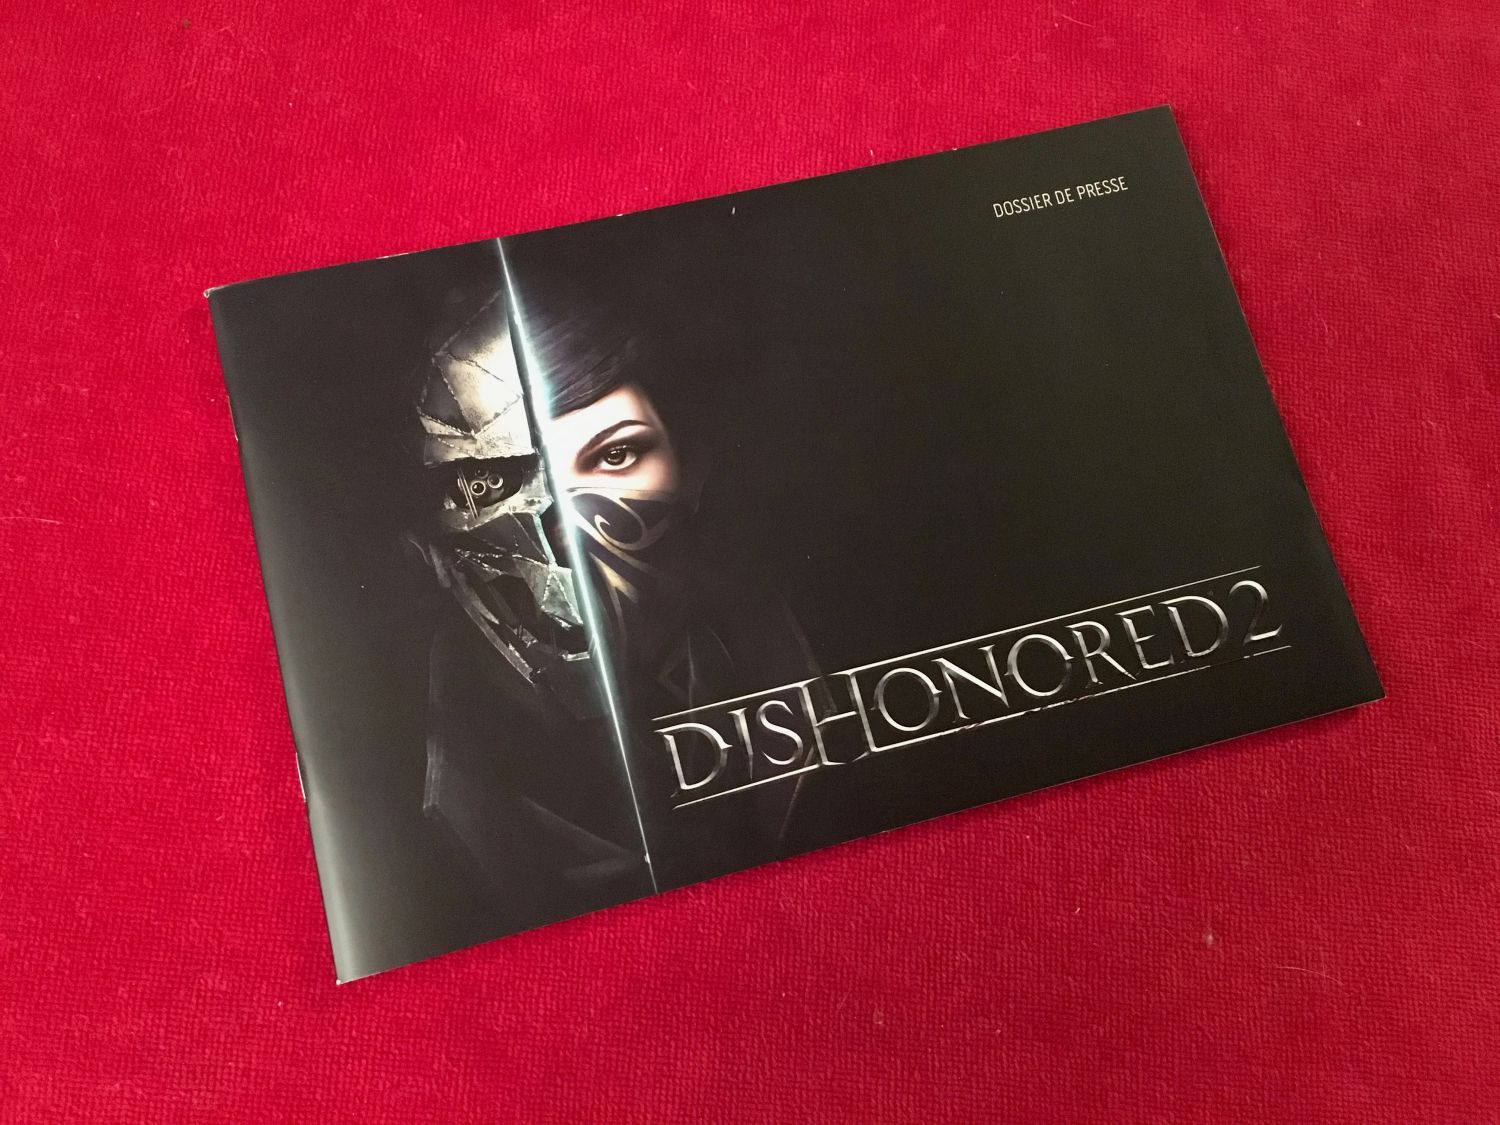 Le dossier de presse de Dishonored 2.